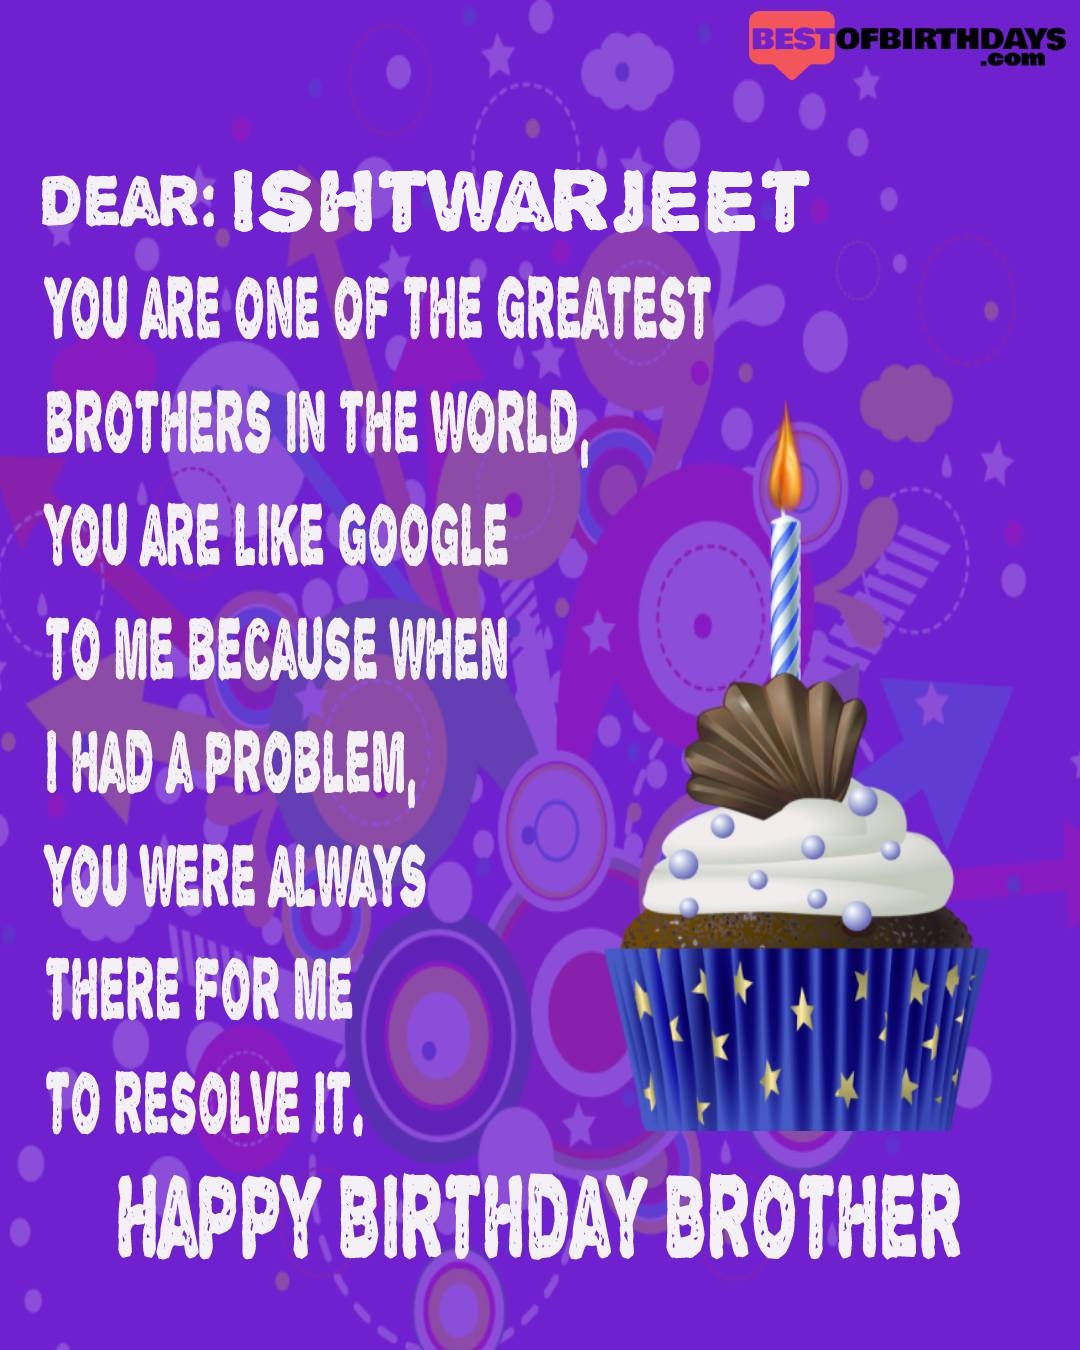 Happy birthday ishtwarjeet bhai brother bro